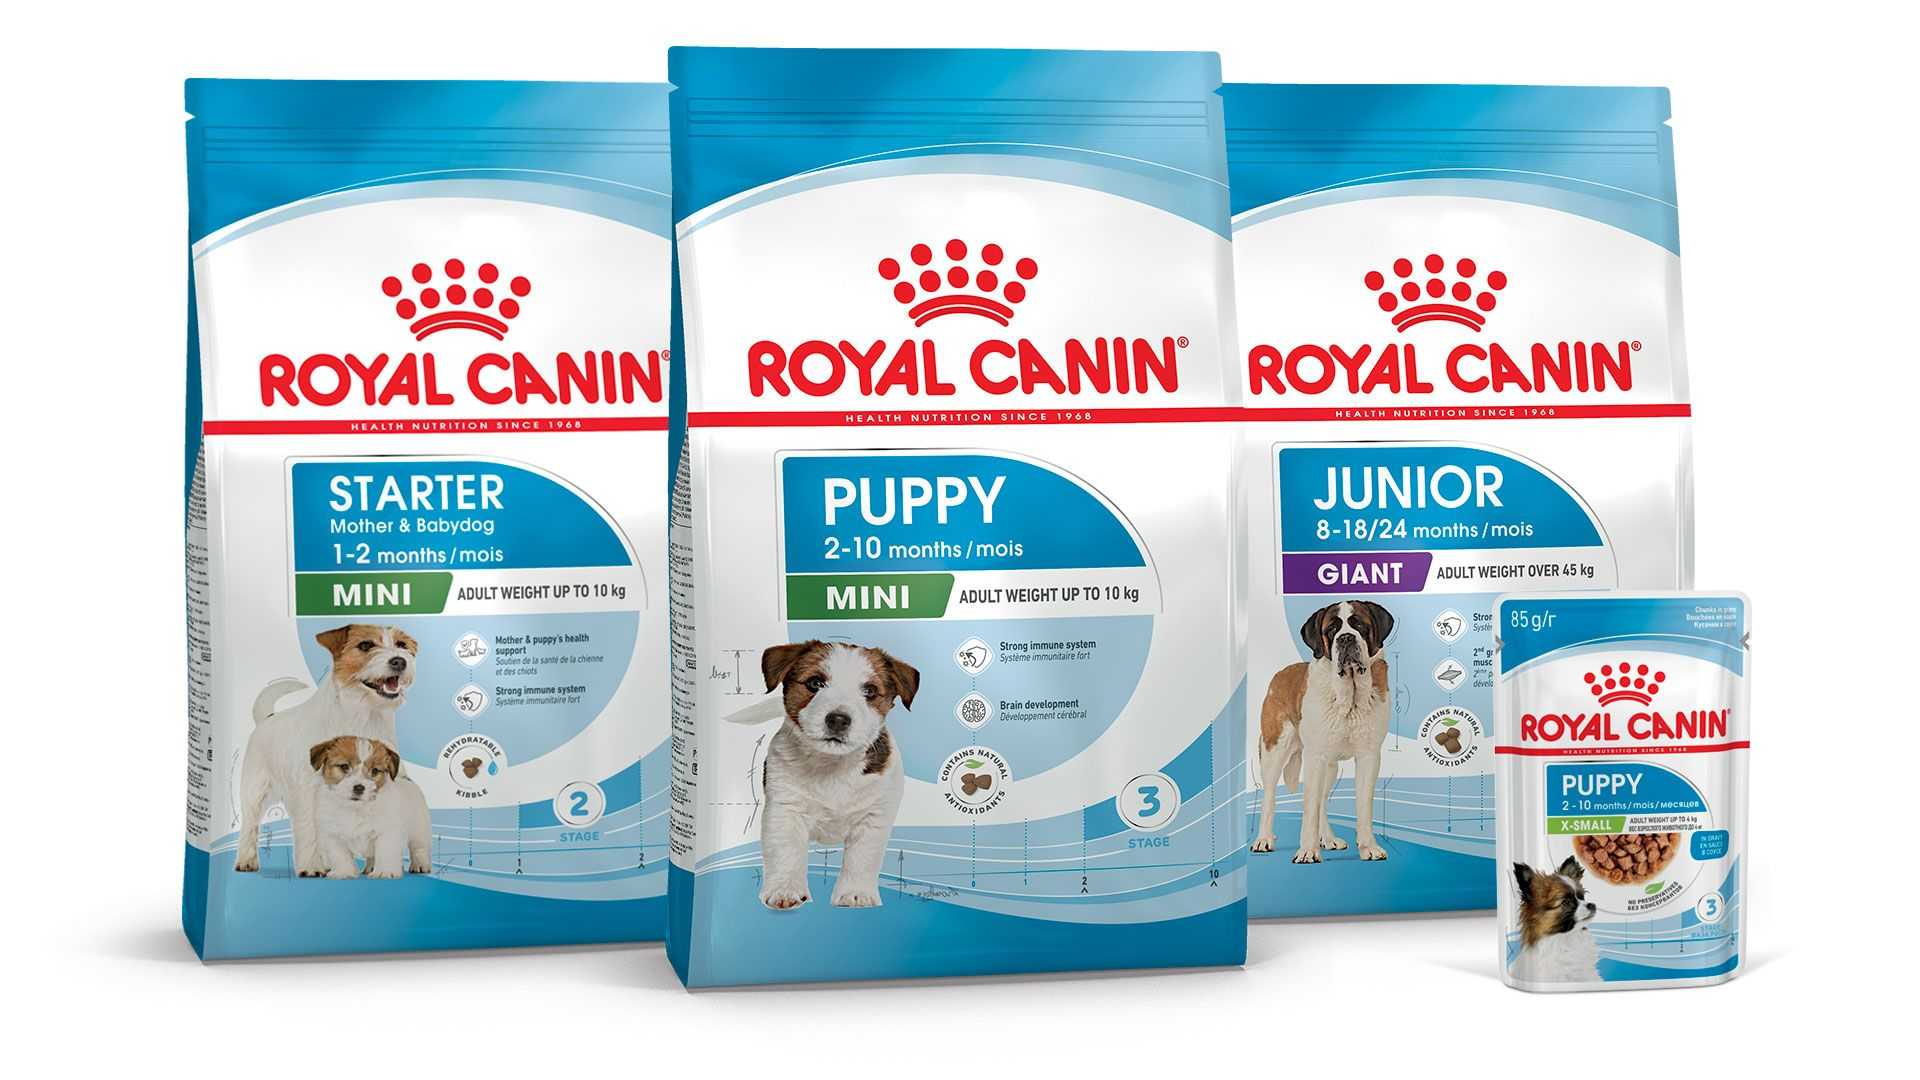 Royal Canin Puppy Growth Program line